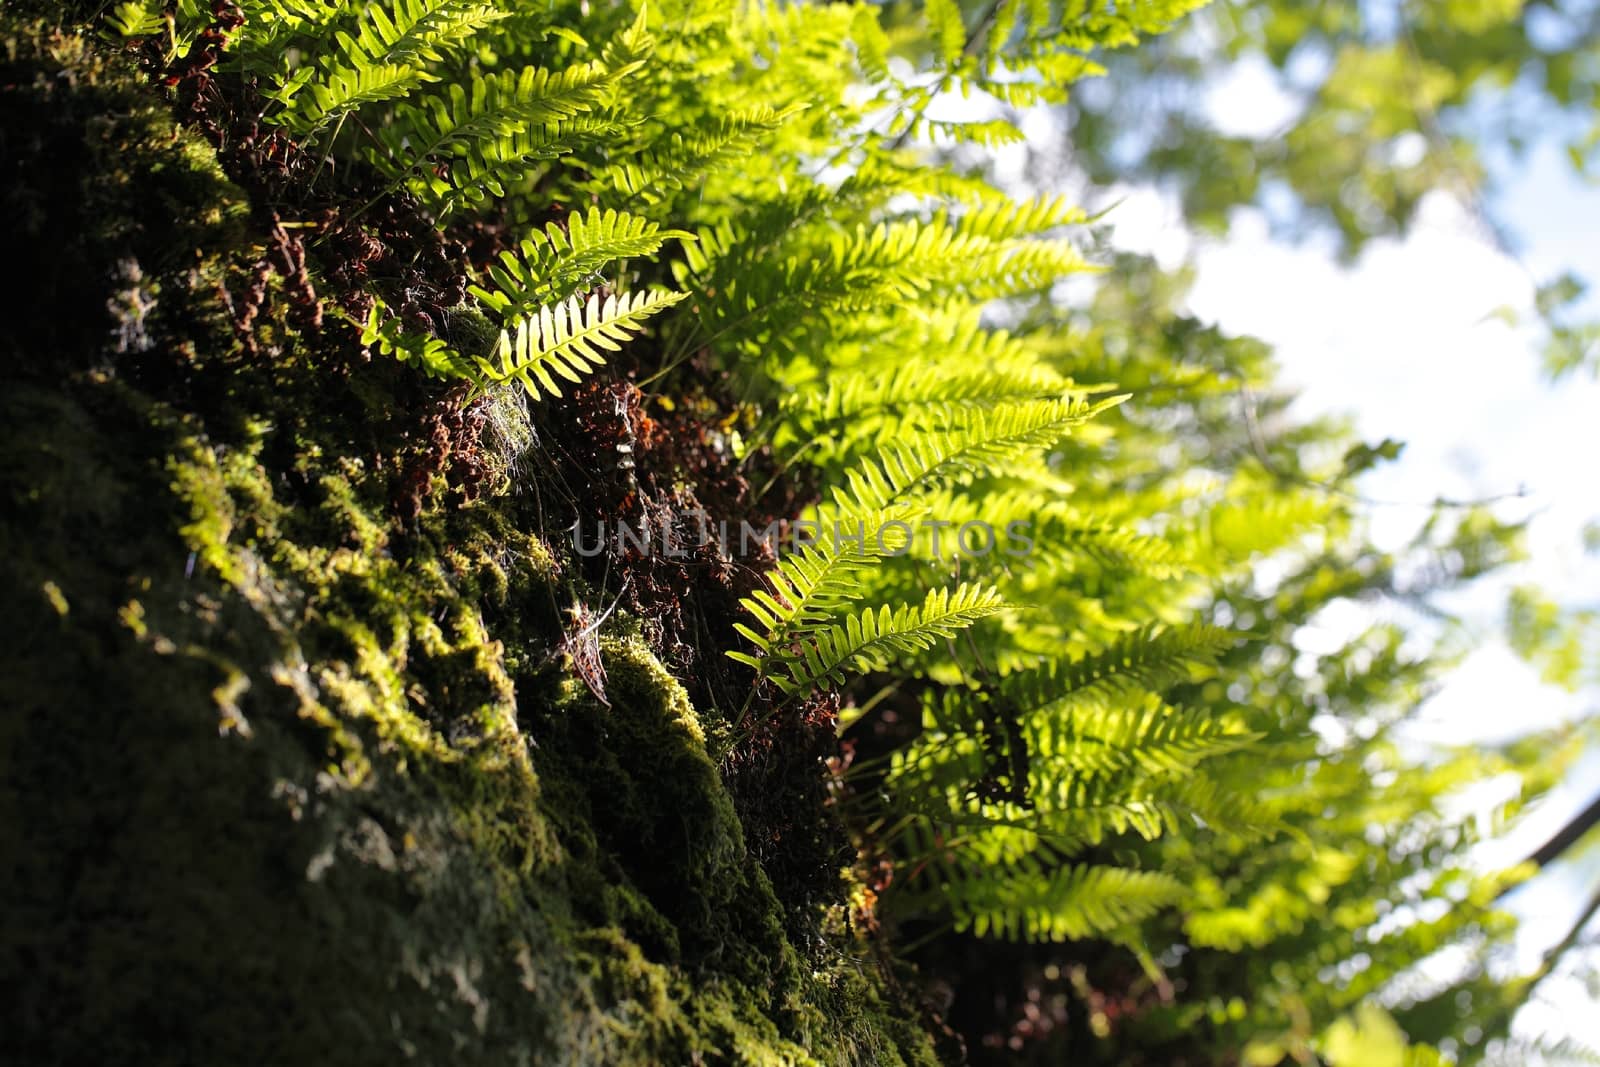 Deer fern leaves on a rock in a spruce forest.